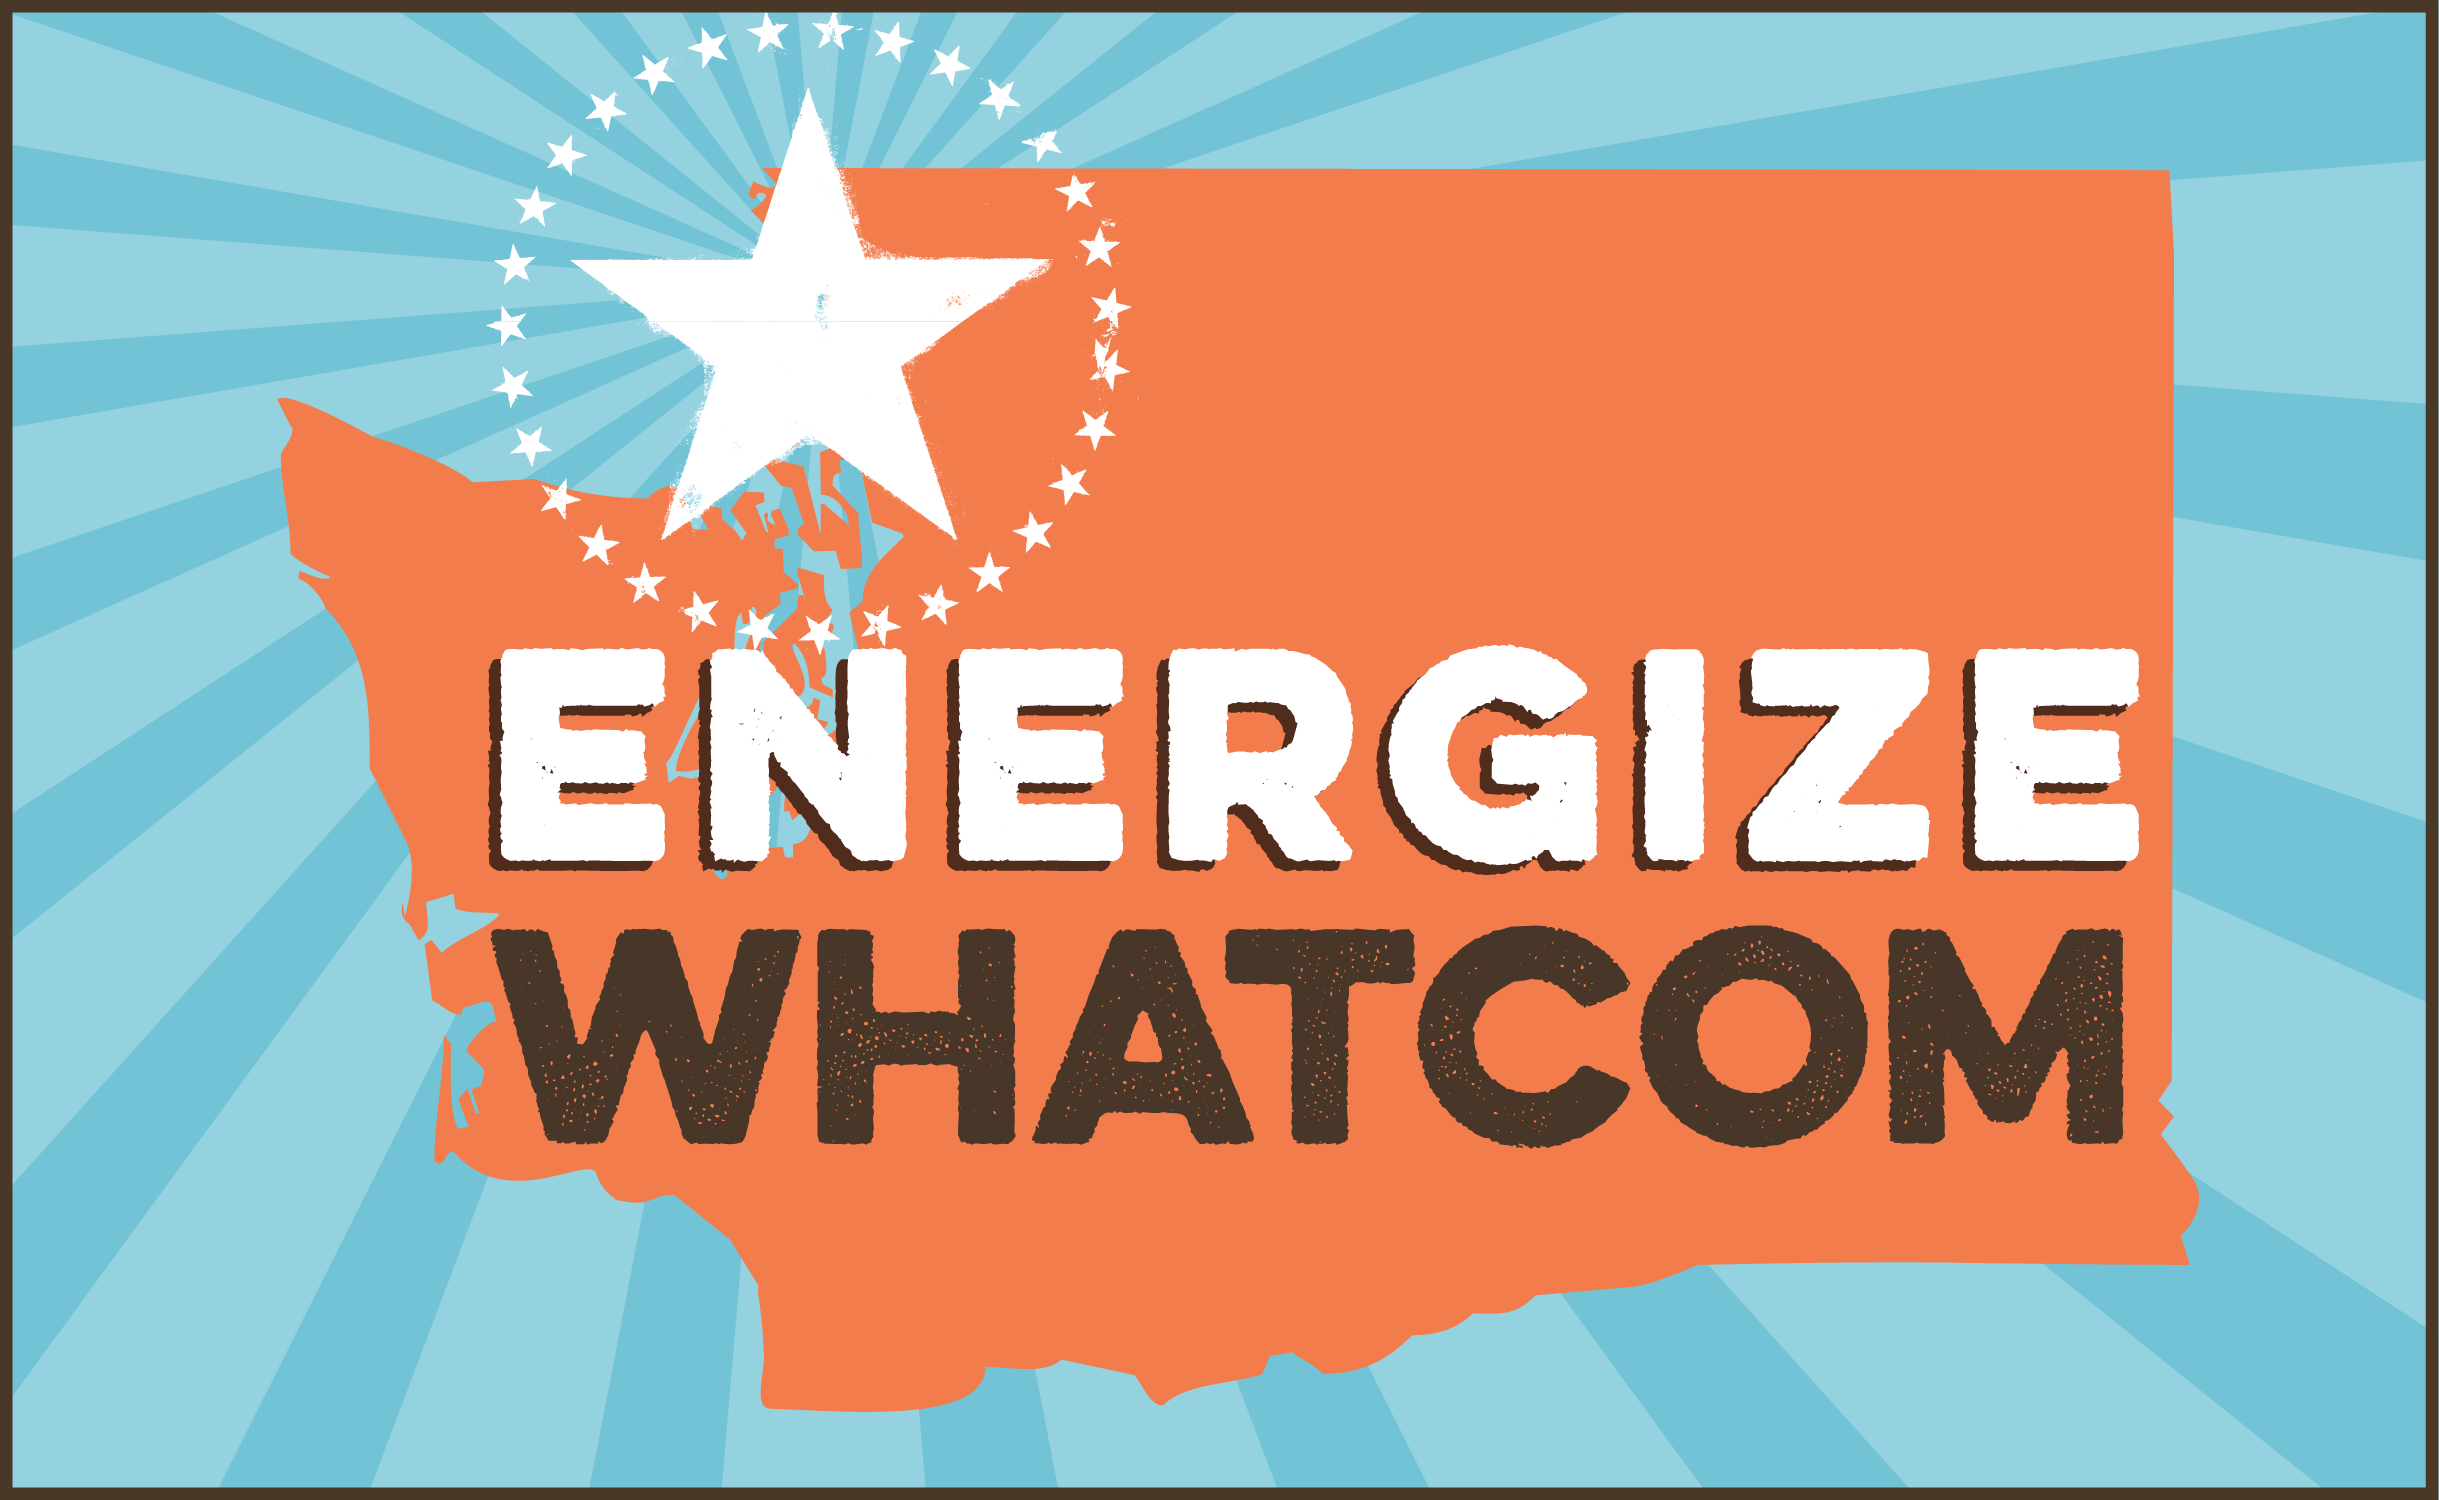 Energize Whatcom